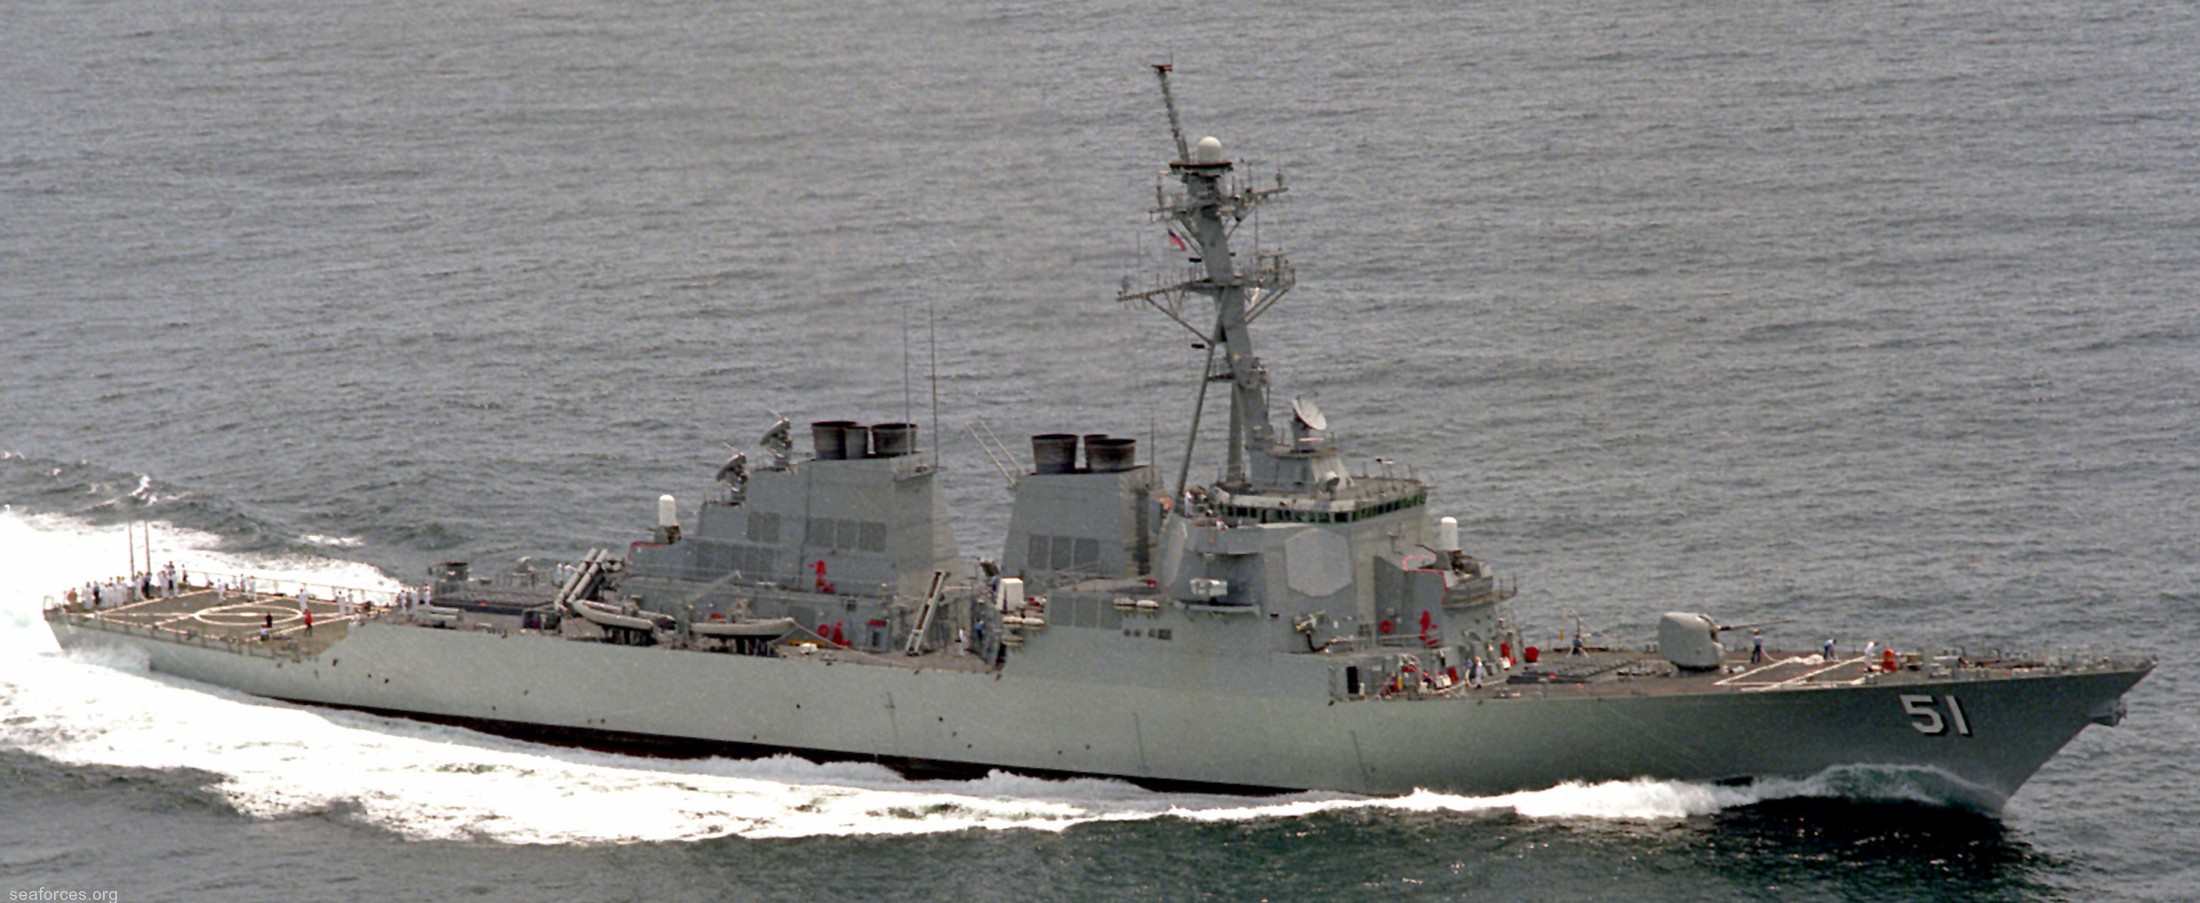 ddg-51 uss arleigh burke destroyer us navy 70